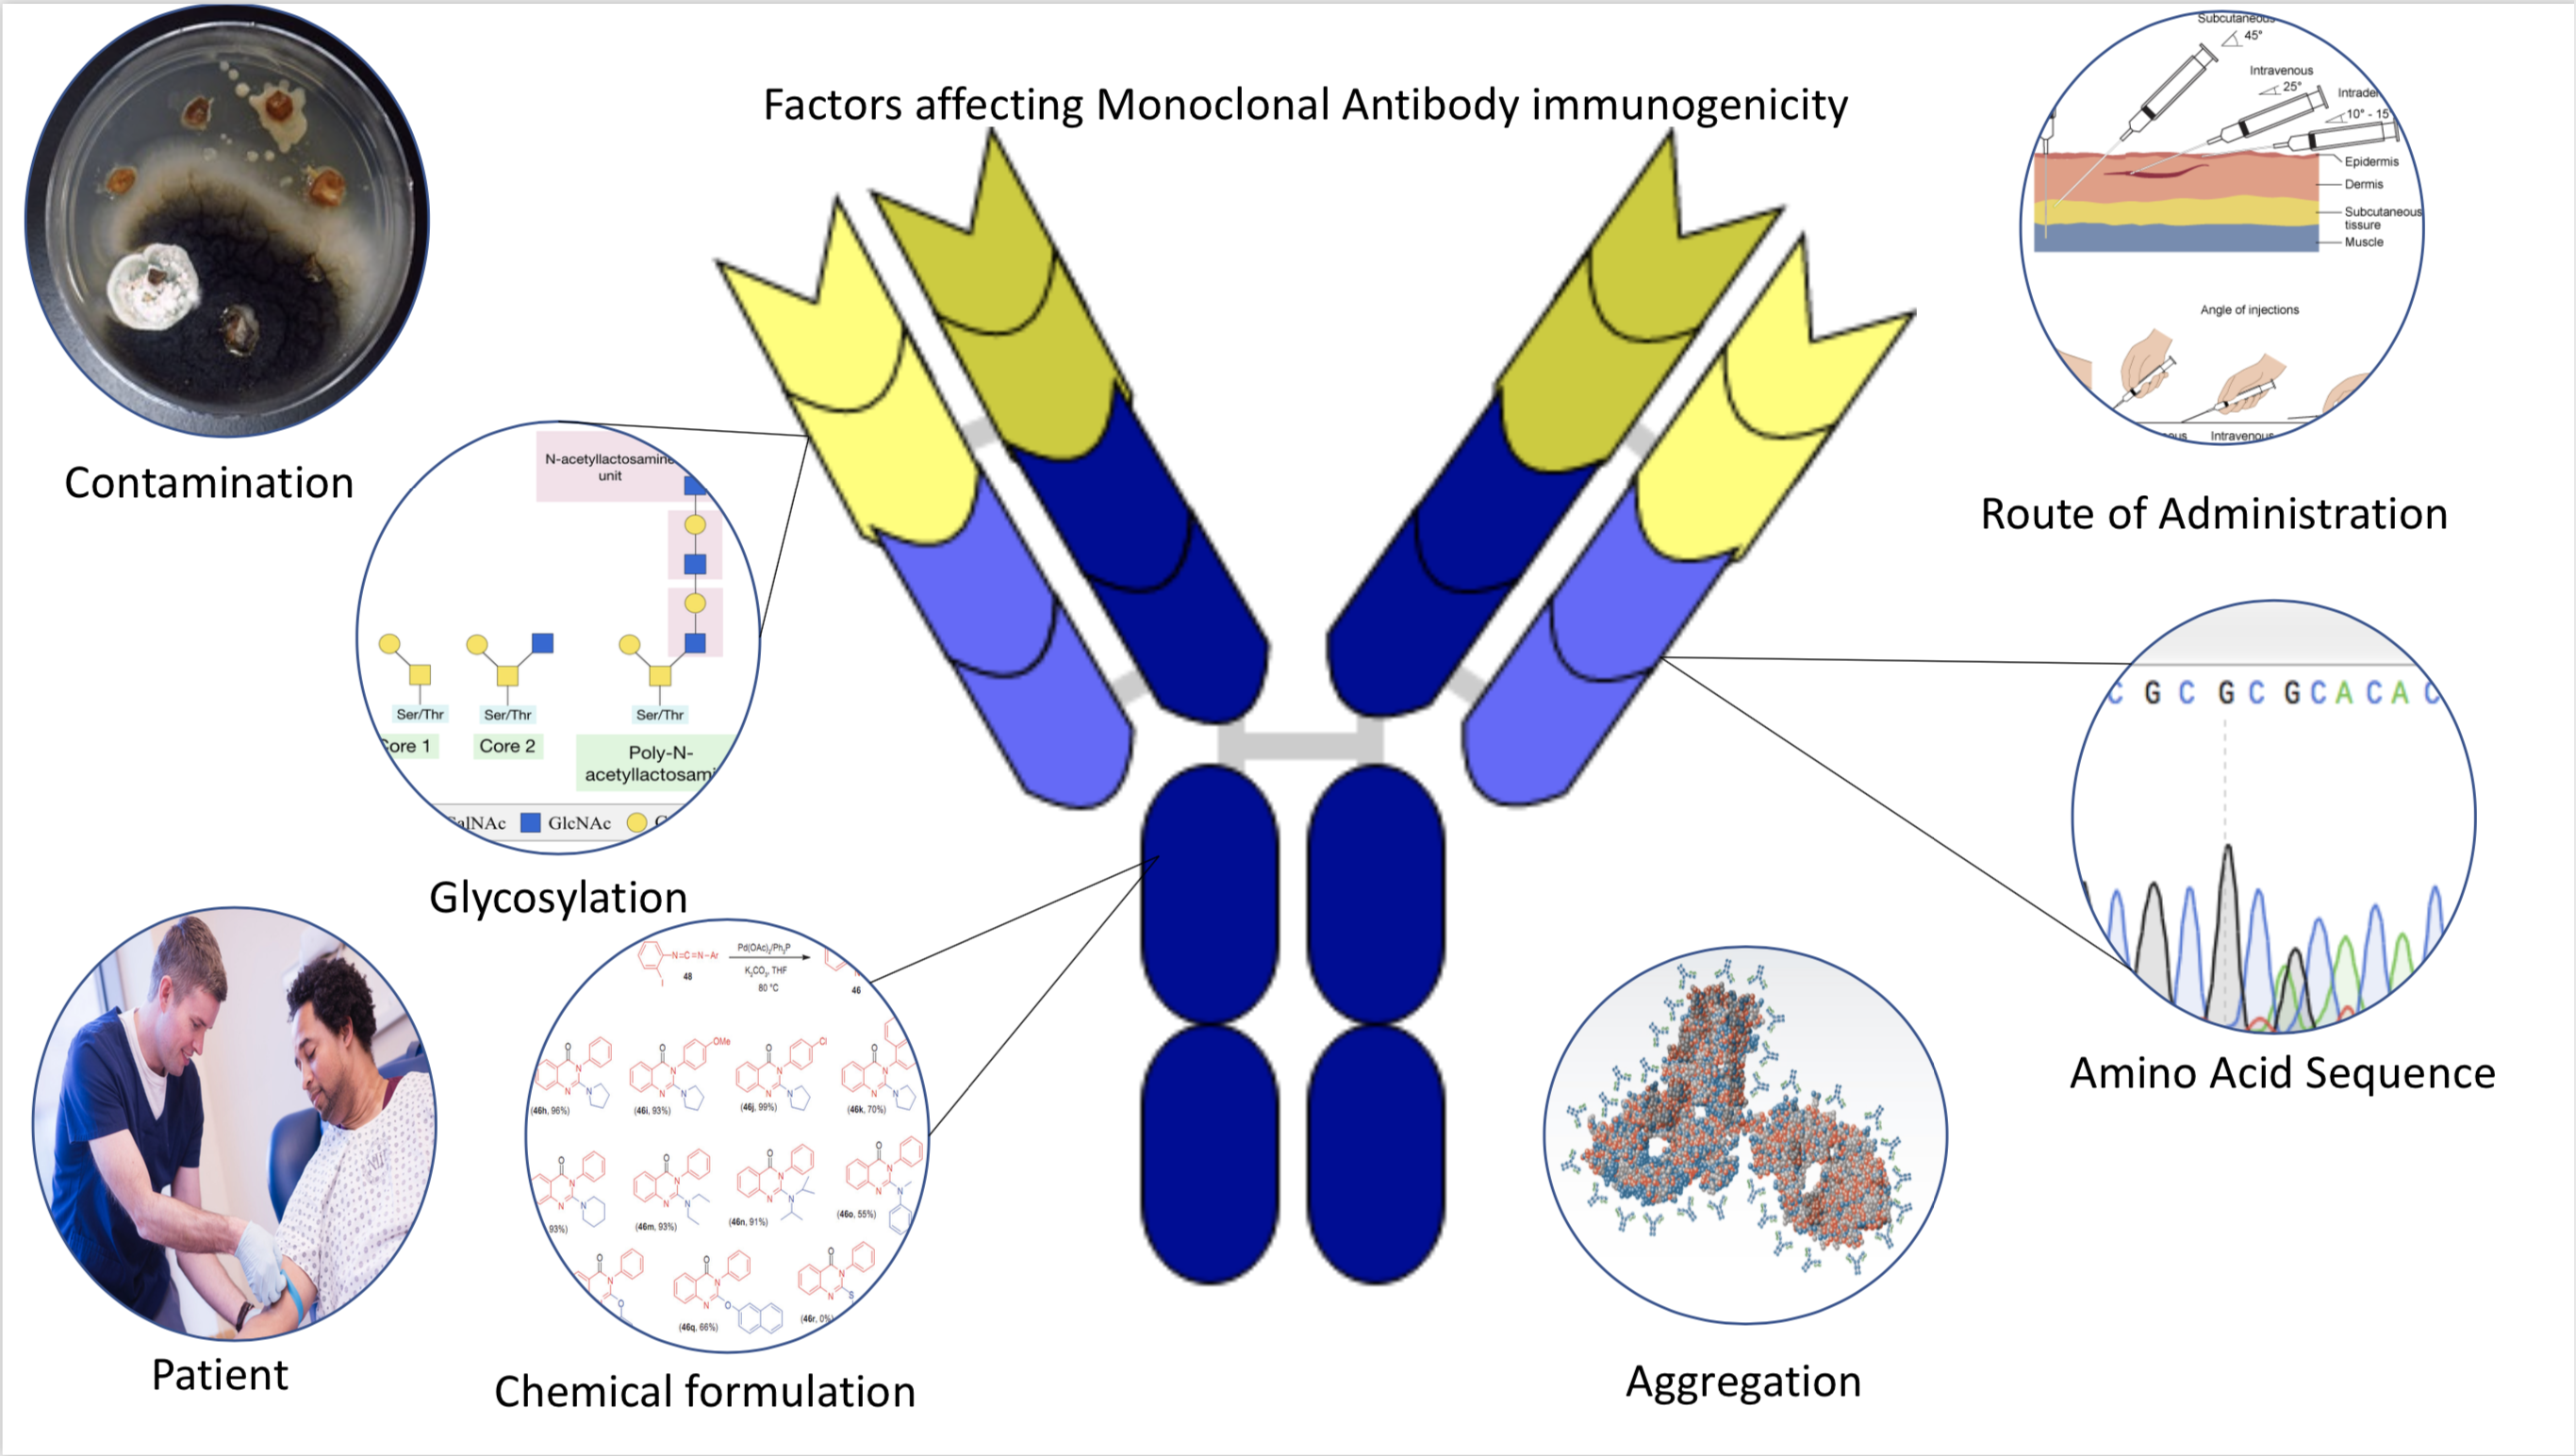 Which Factors affects Immunogenicity? - Factors affecting Immunogenicity